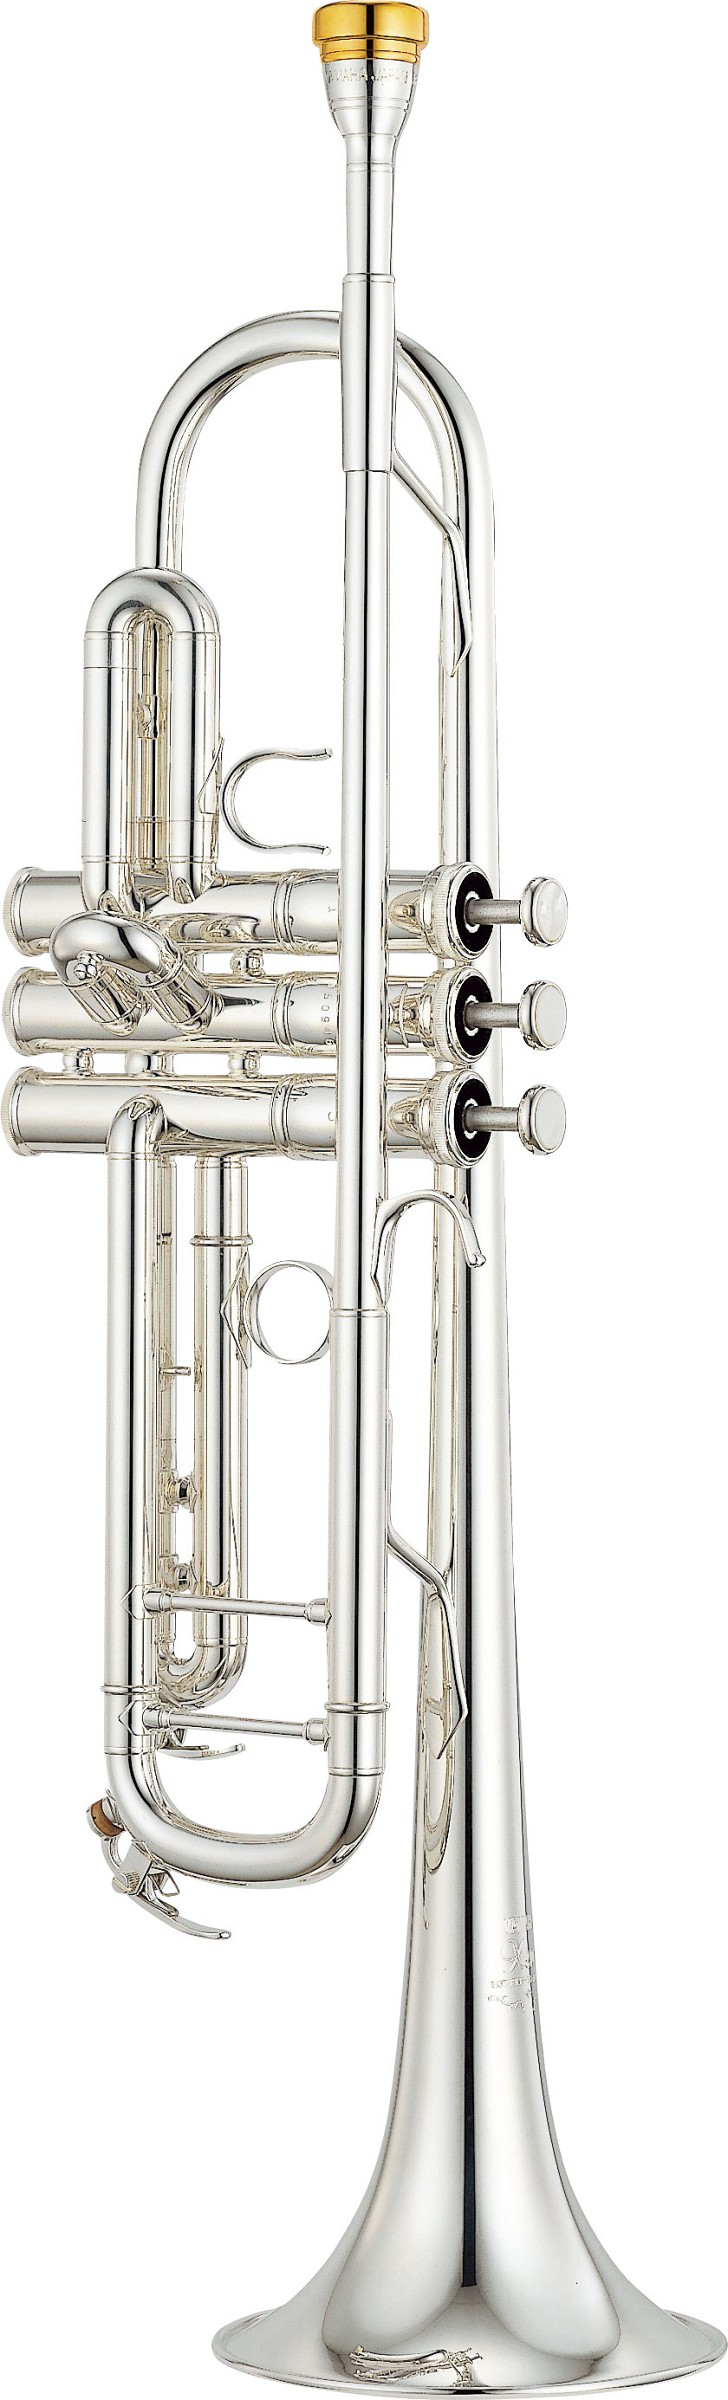 Yamaha YTR-8345S 04 Trompete